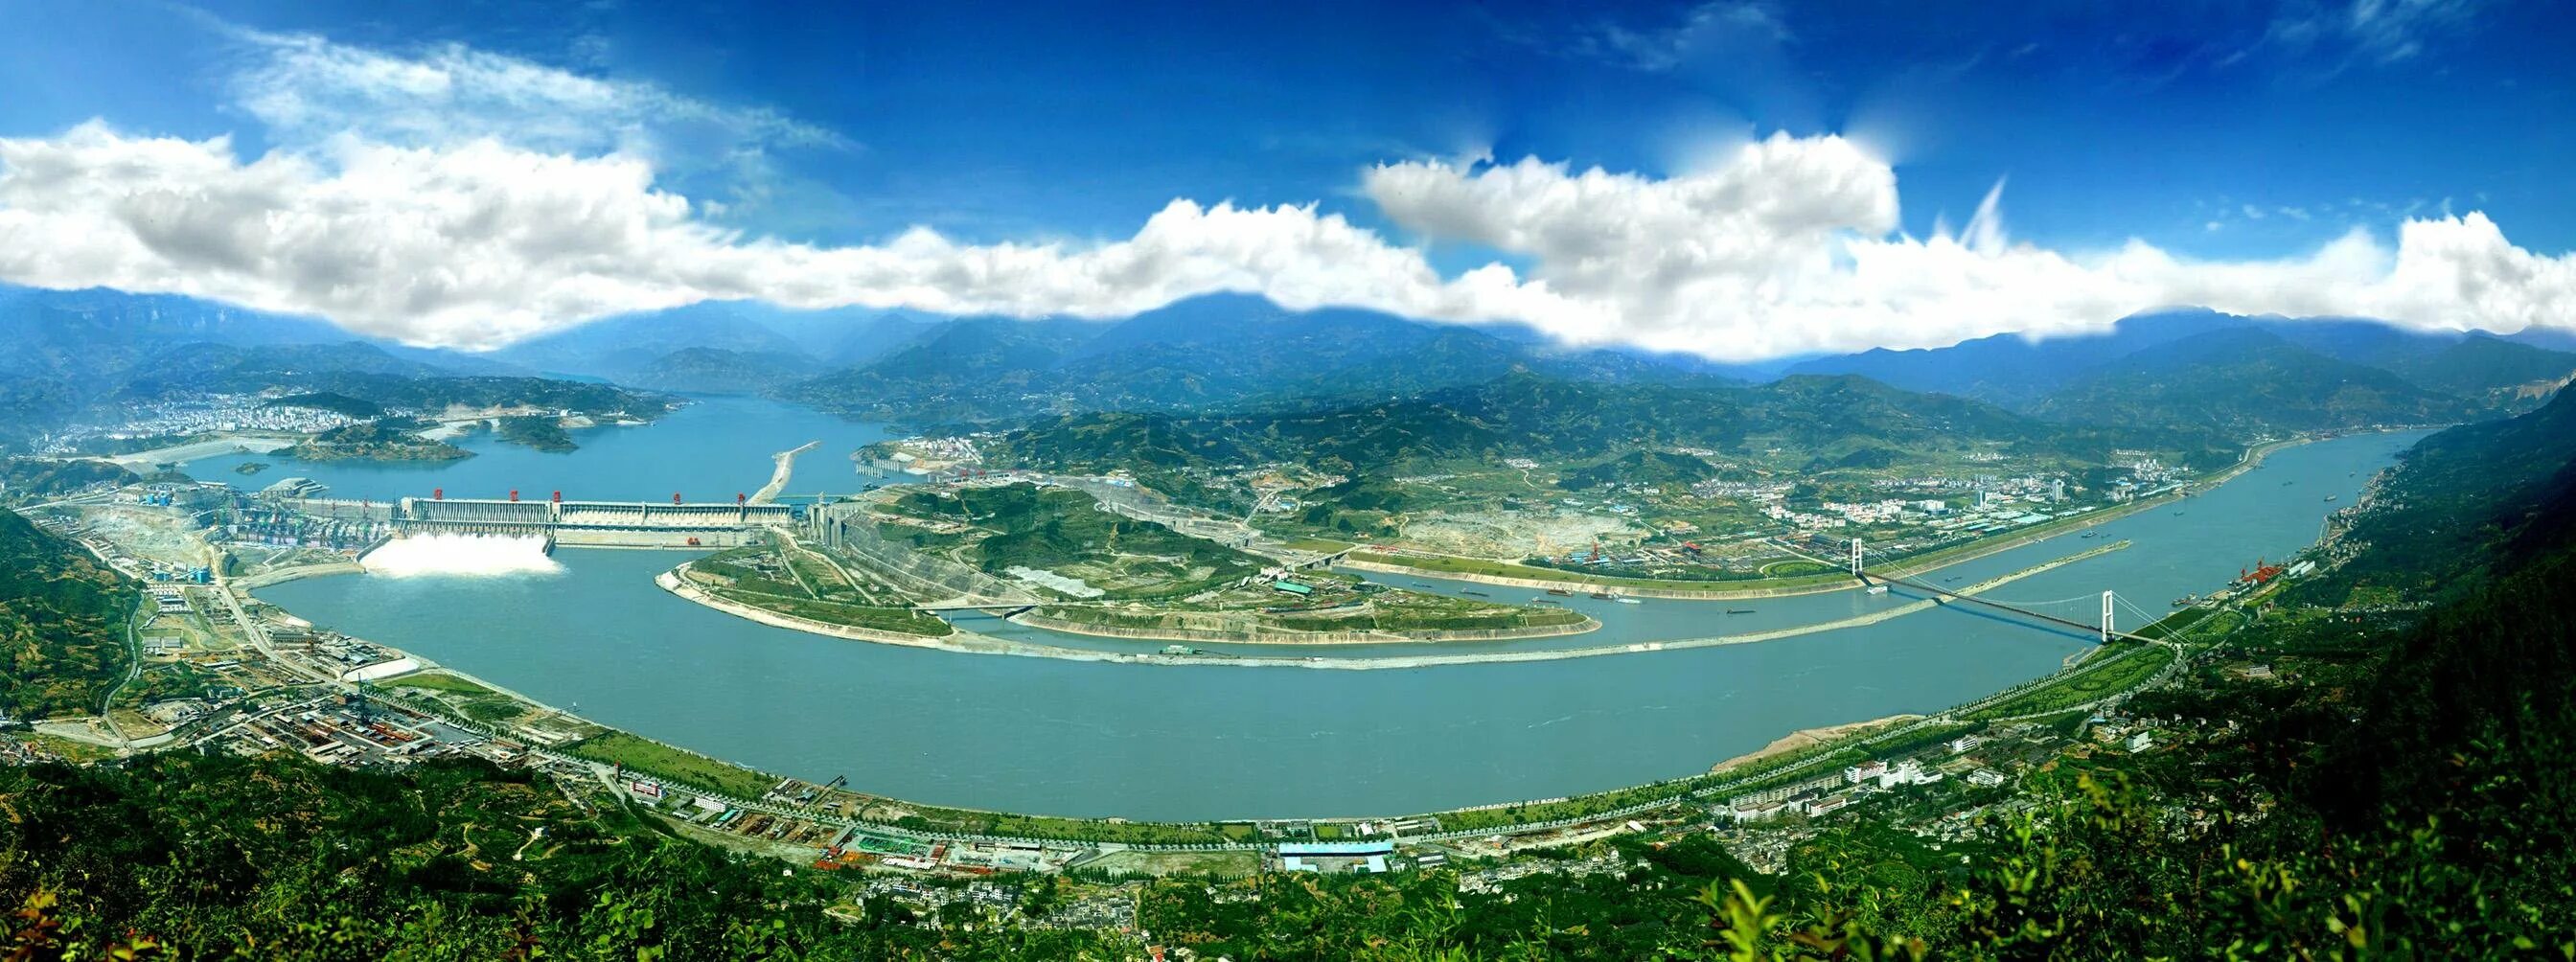 Самая длинная река евразии янцзы. Река Янцзы Китай. Китай Долины рек Янцзы. Долина реки Янцзы. Бассейн реки Янцзы, Китай.